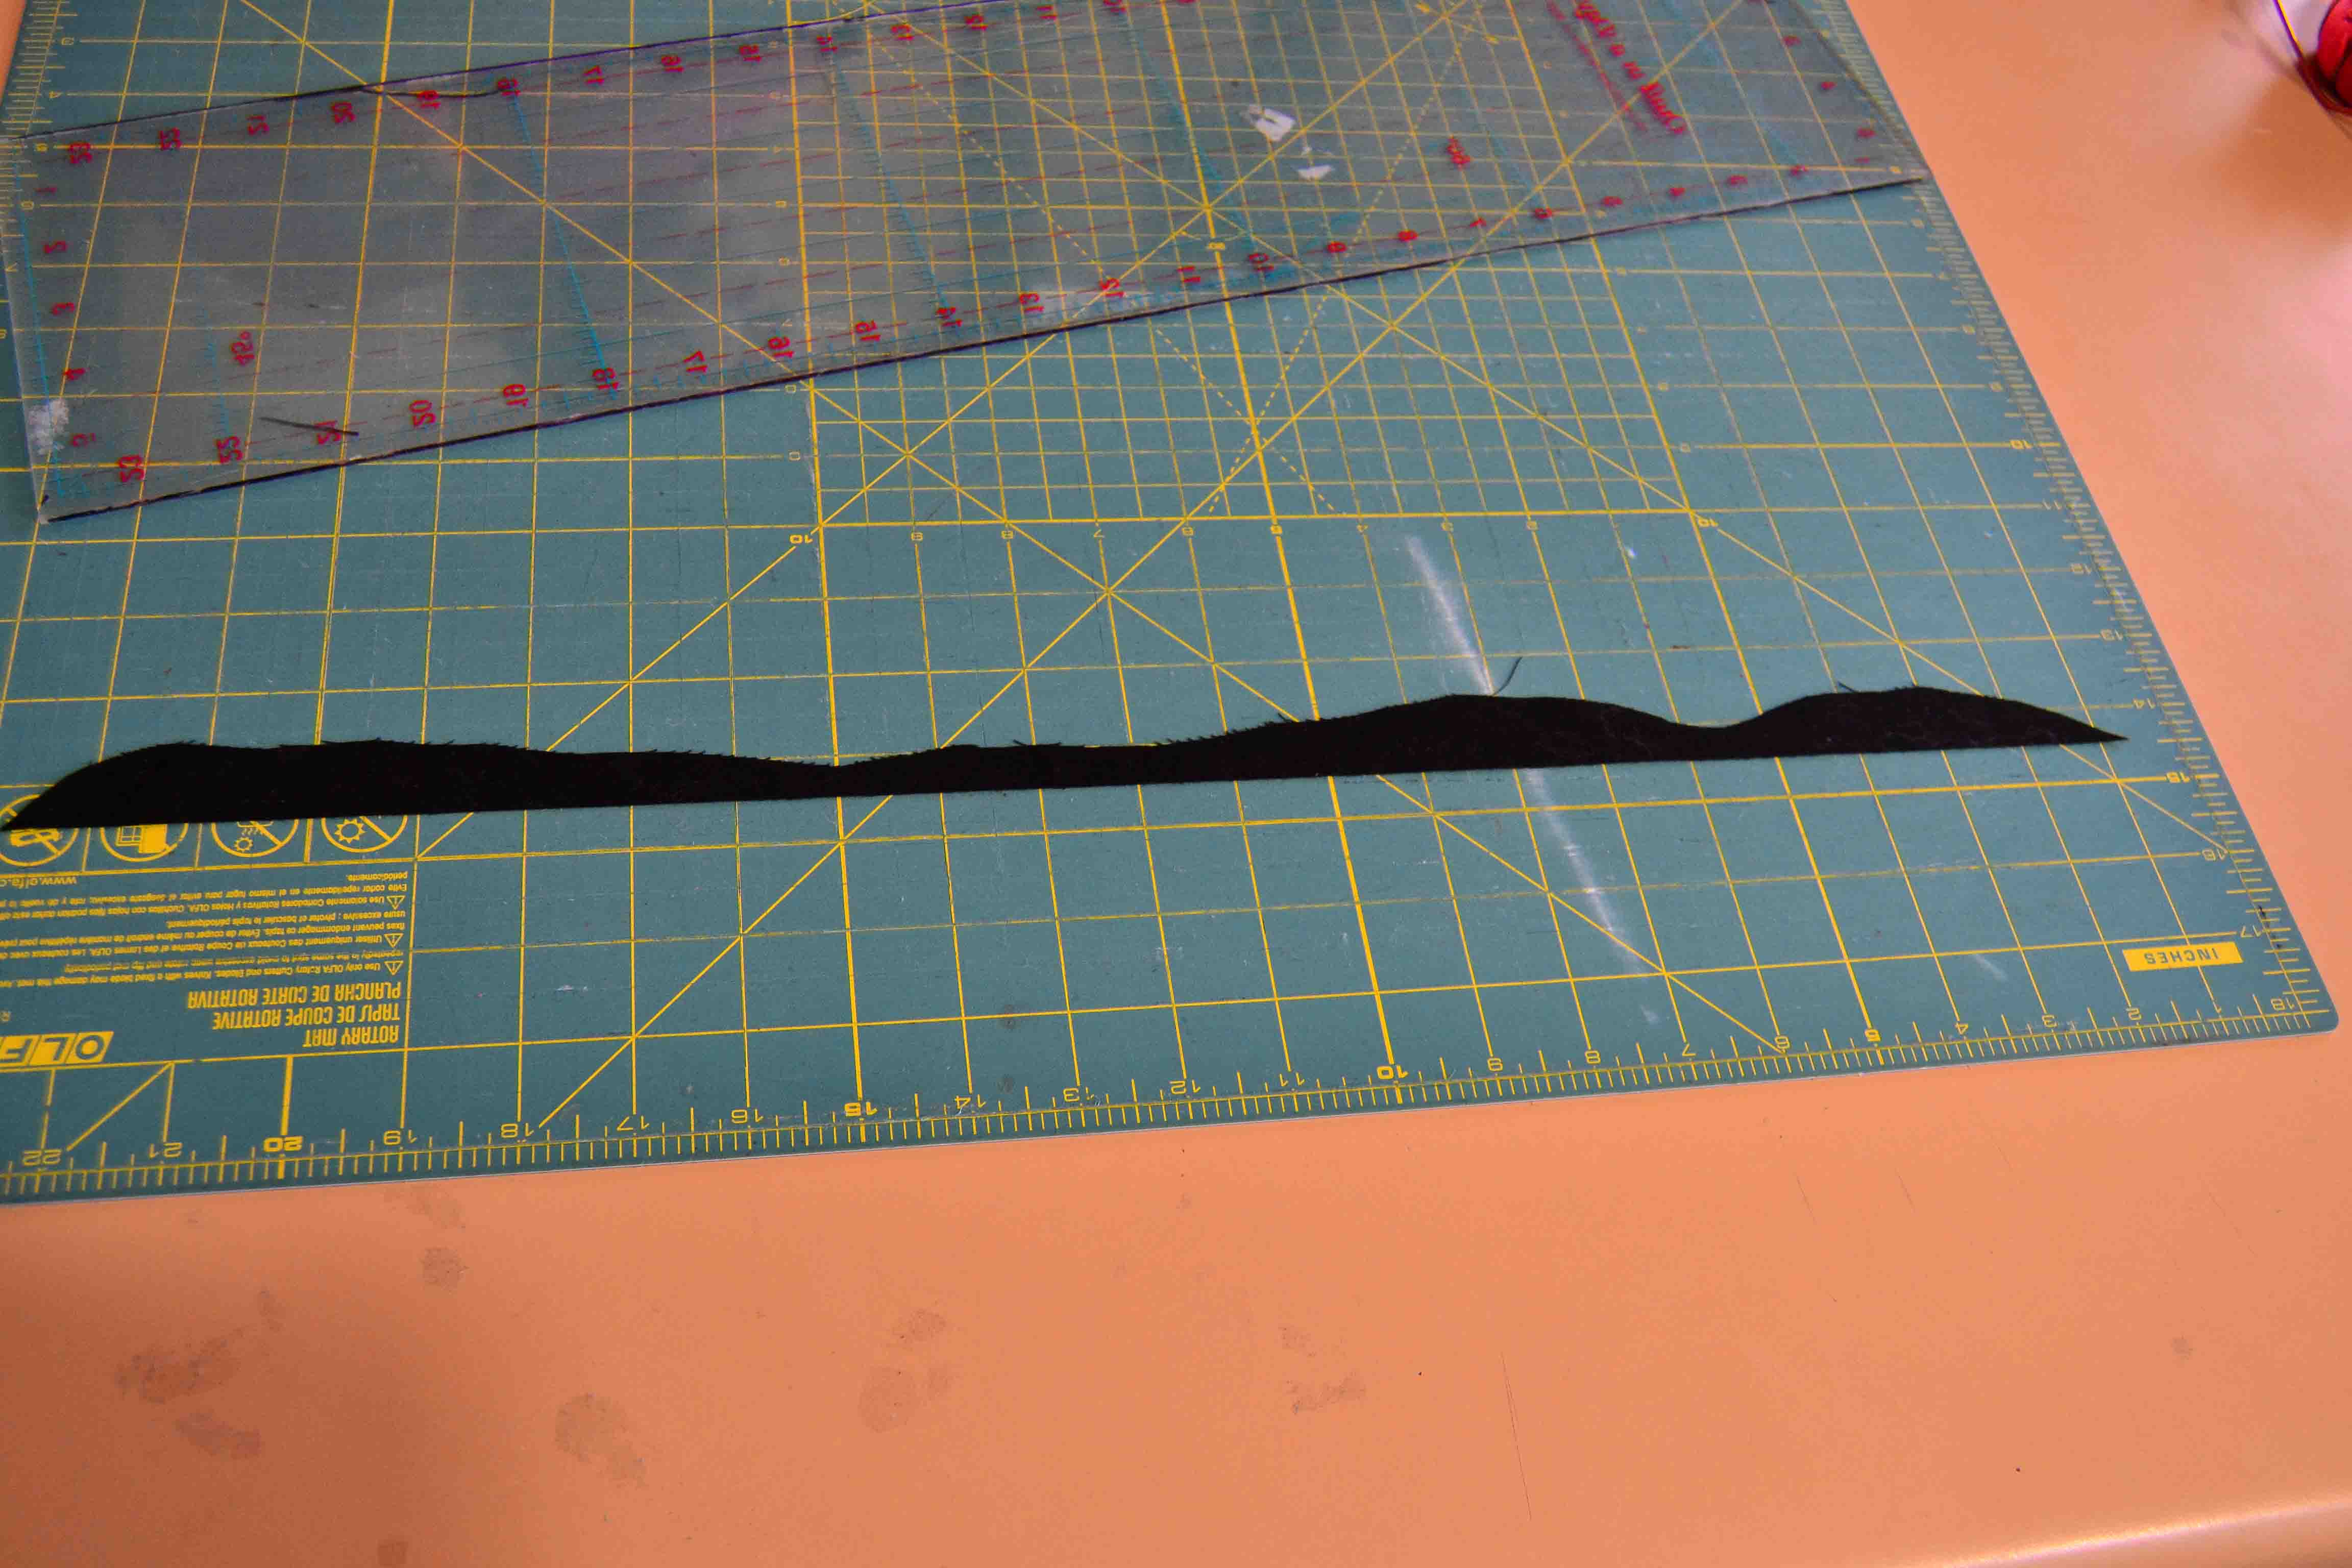 Show a green cutting board mat with hard clear ruler